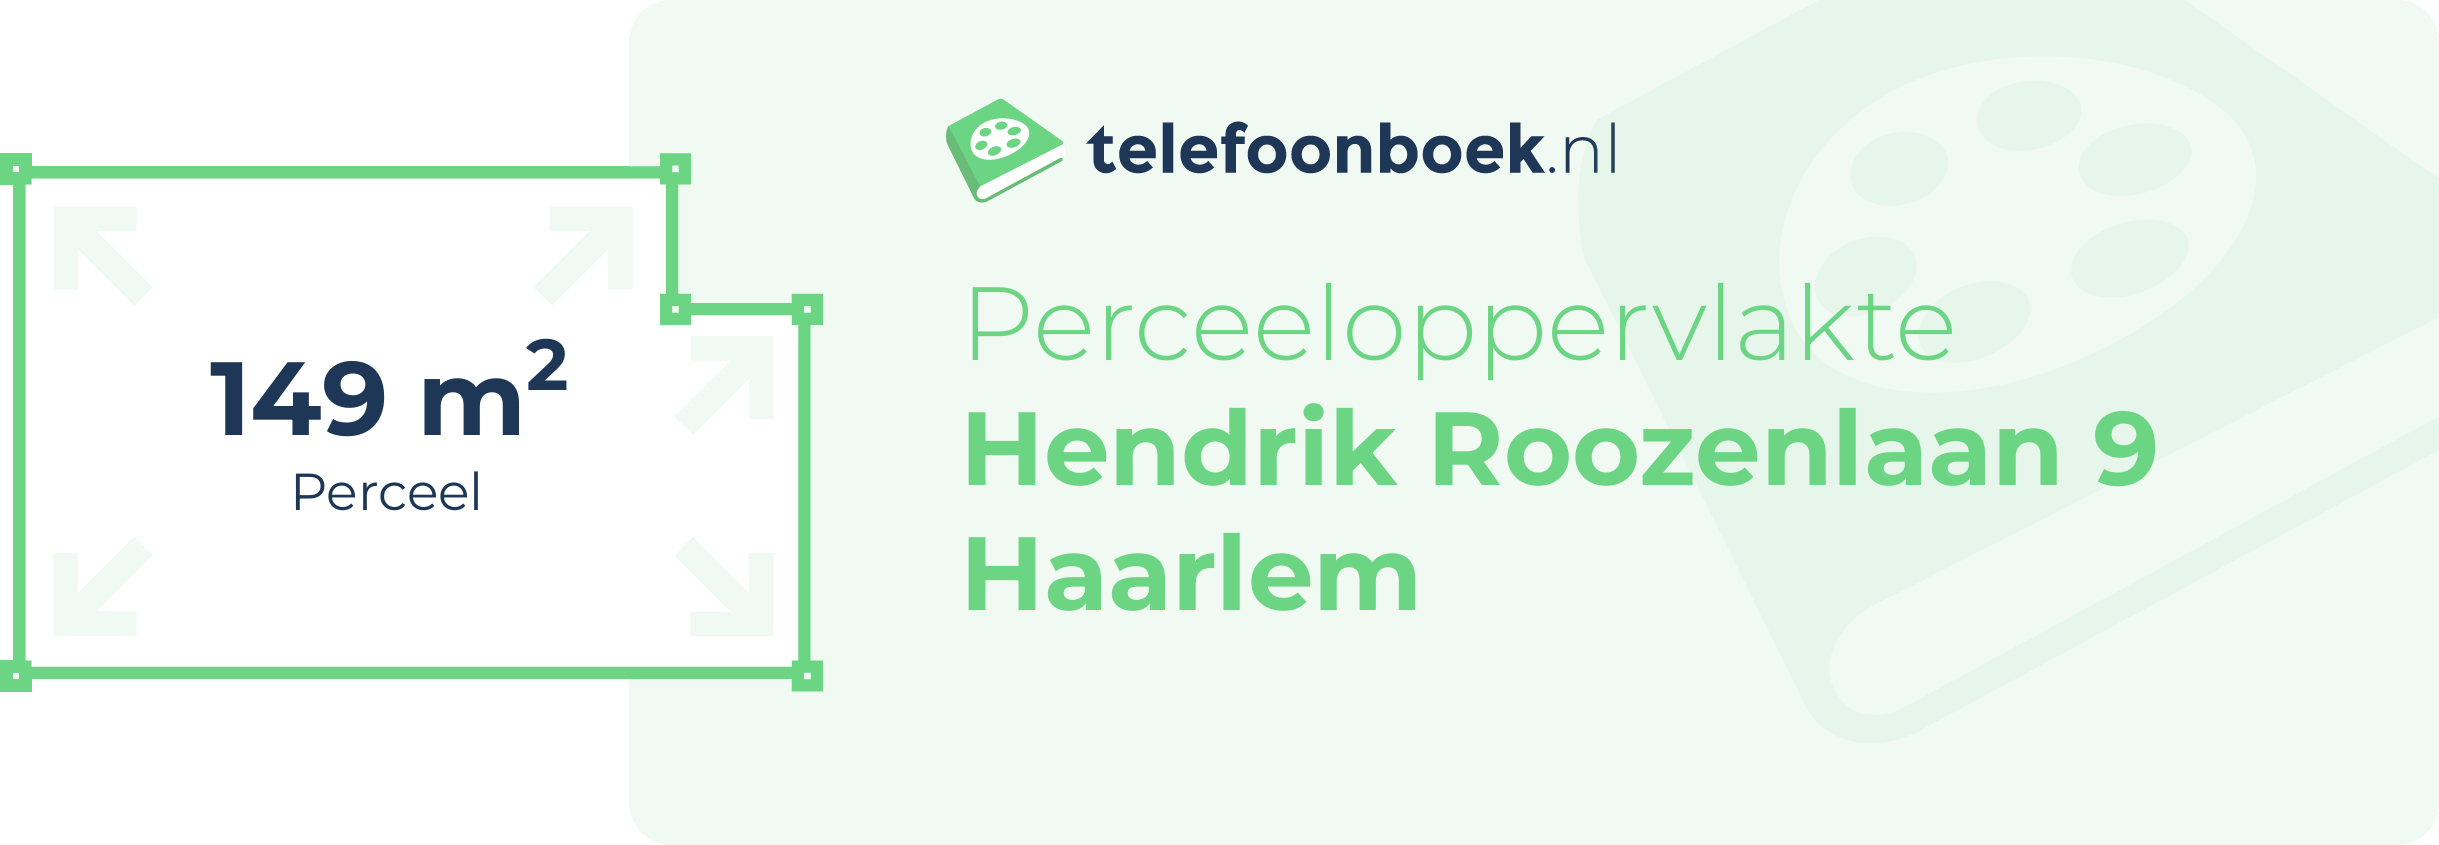 Perceeloppervlakte Hendrik Roozenlaan 9 Haarlem